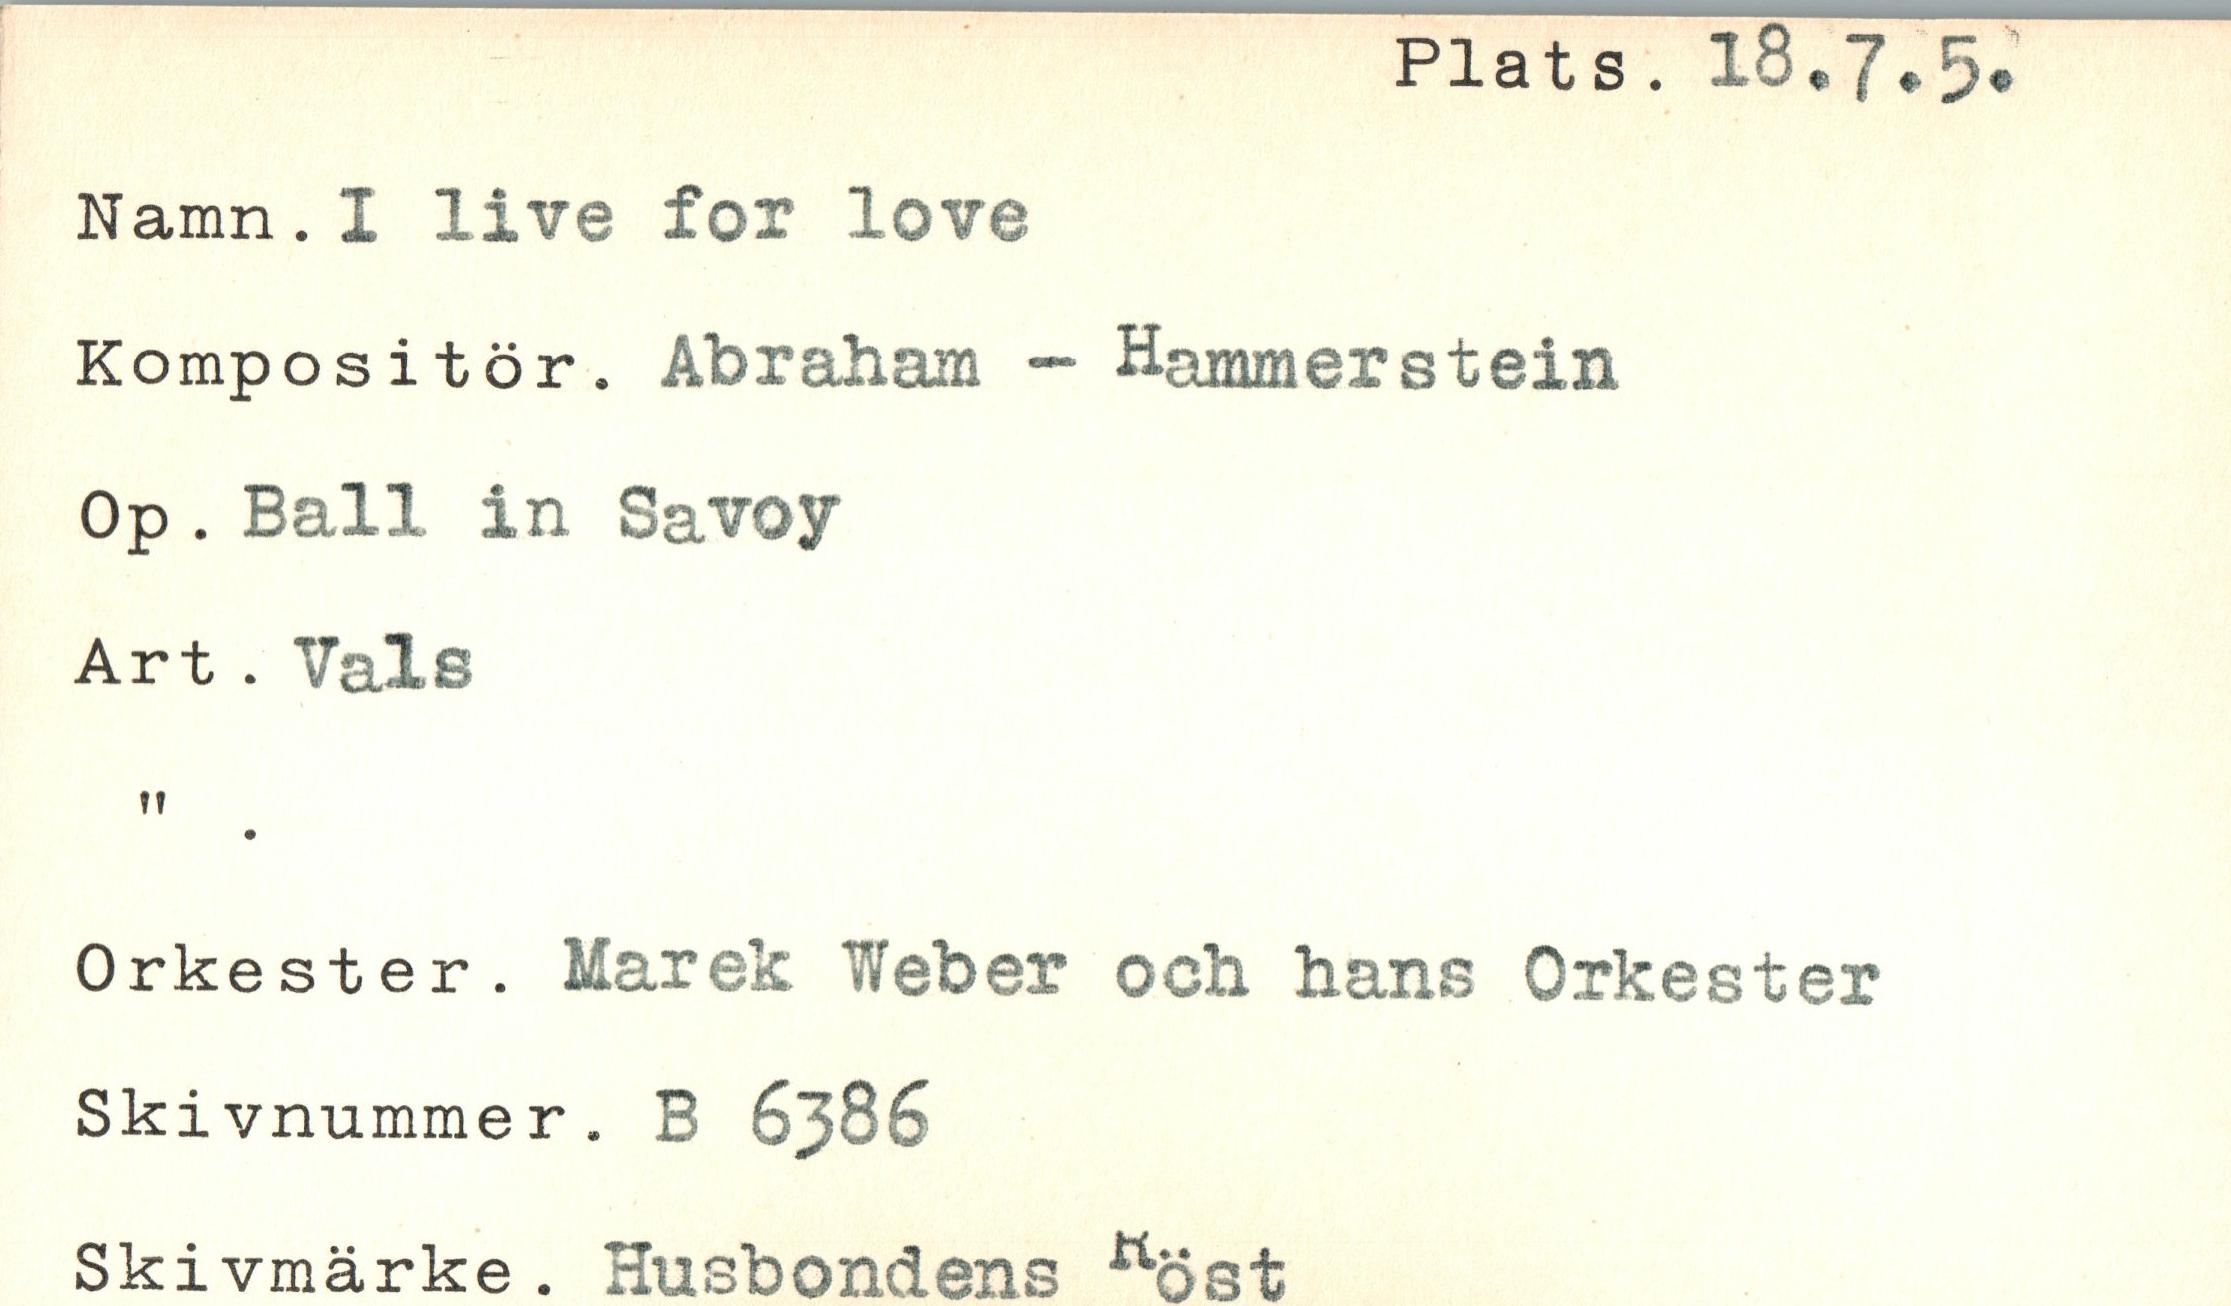 Kort nummer 24: I live for love med Abraham - Hammerstein